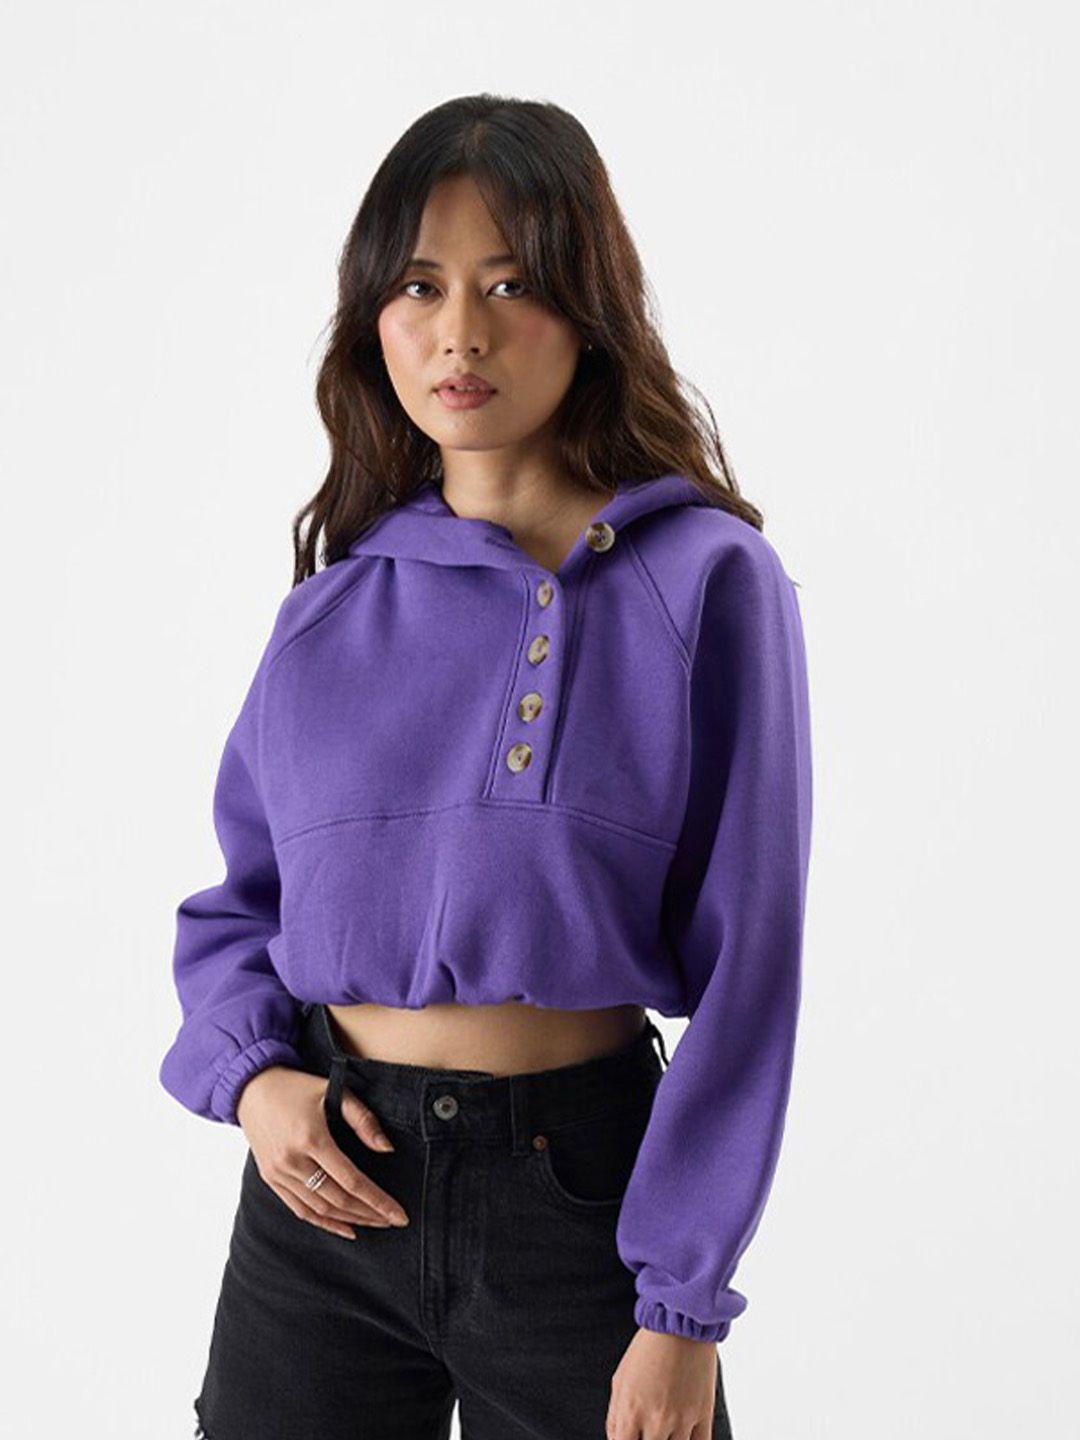 the souled store women violet hooded sweatshirt